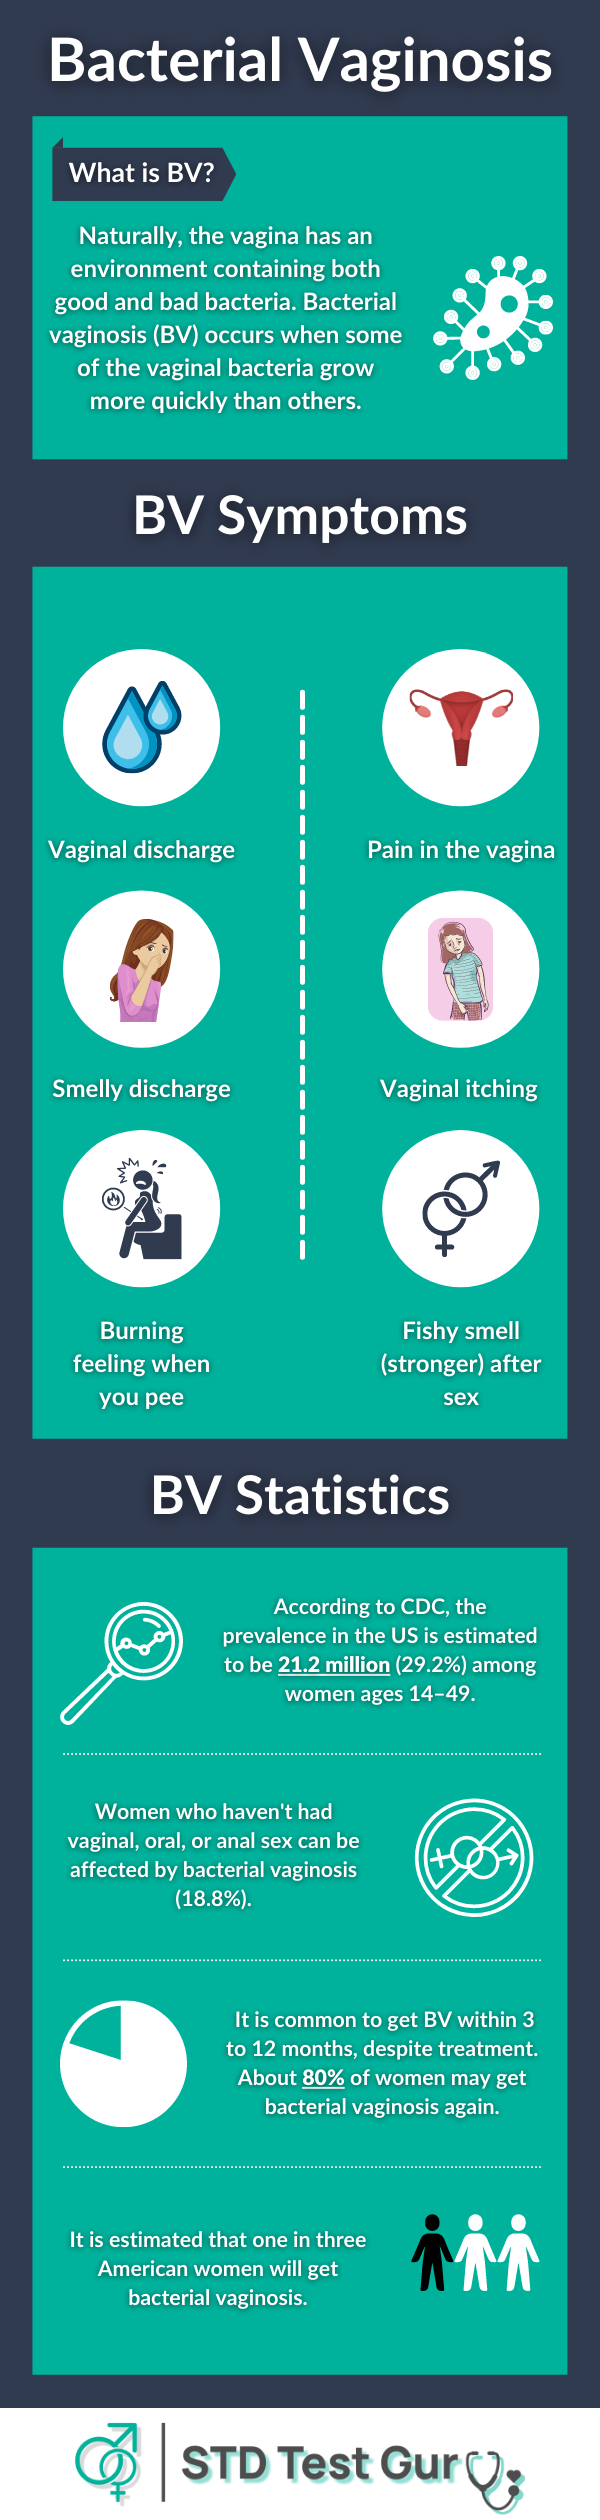 Bacterial vaginosis: Symptoms and Statistics